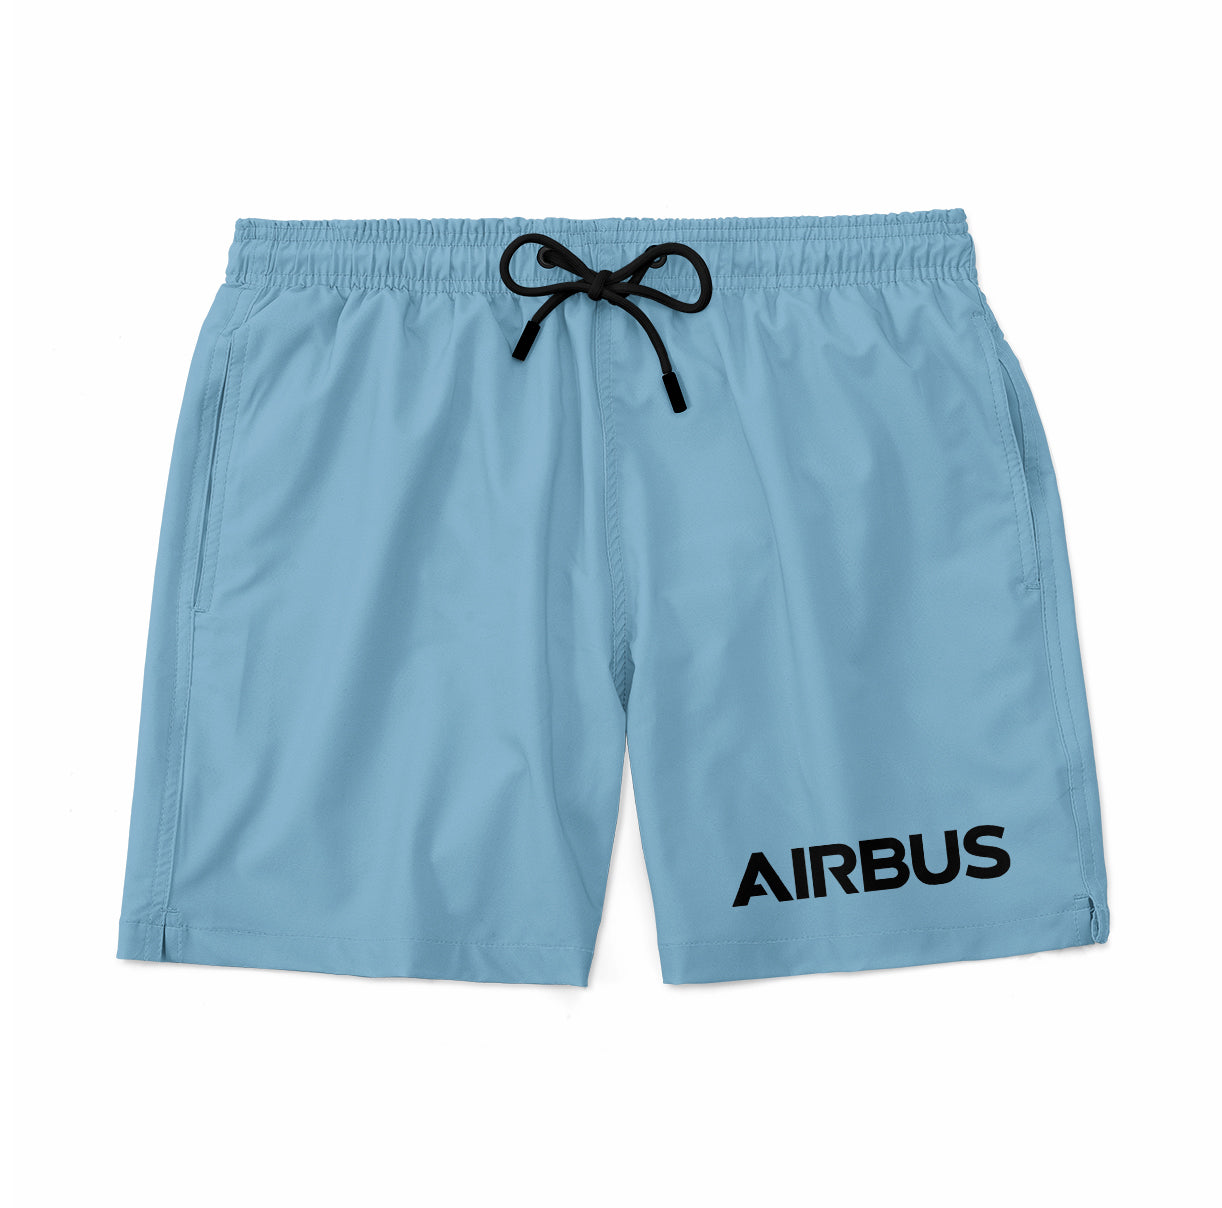 Airbus & Text Designed Swim Trunks & Shorts